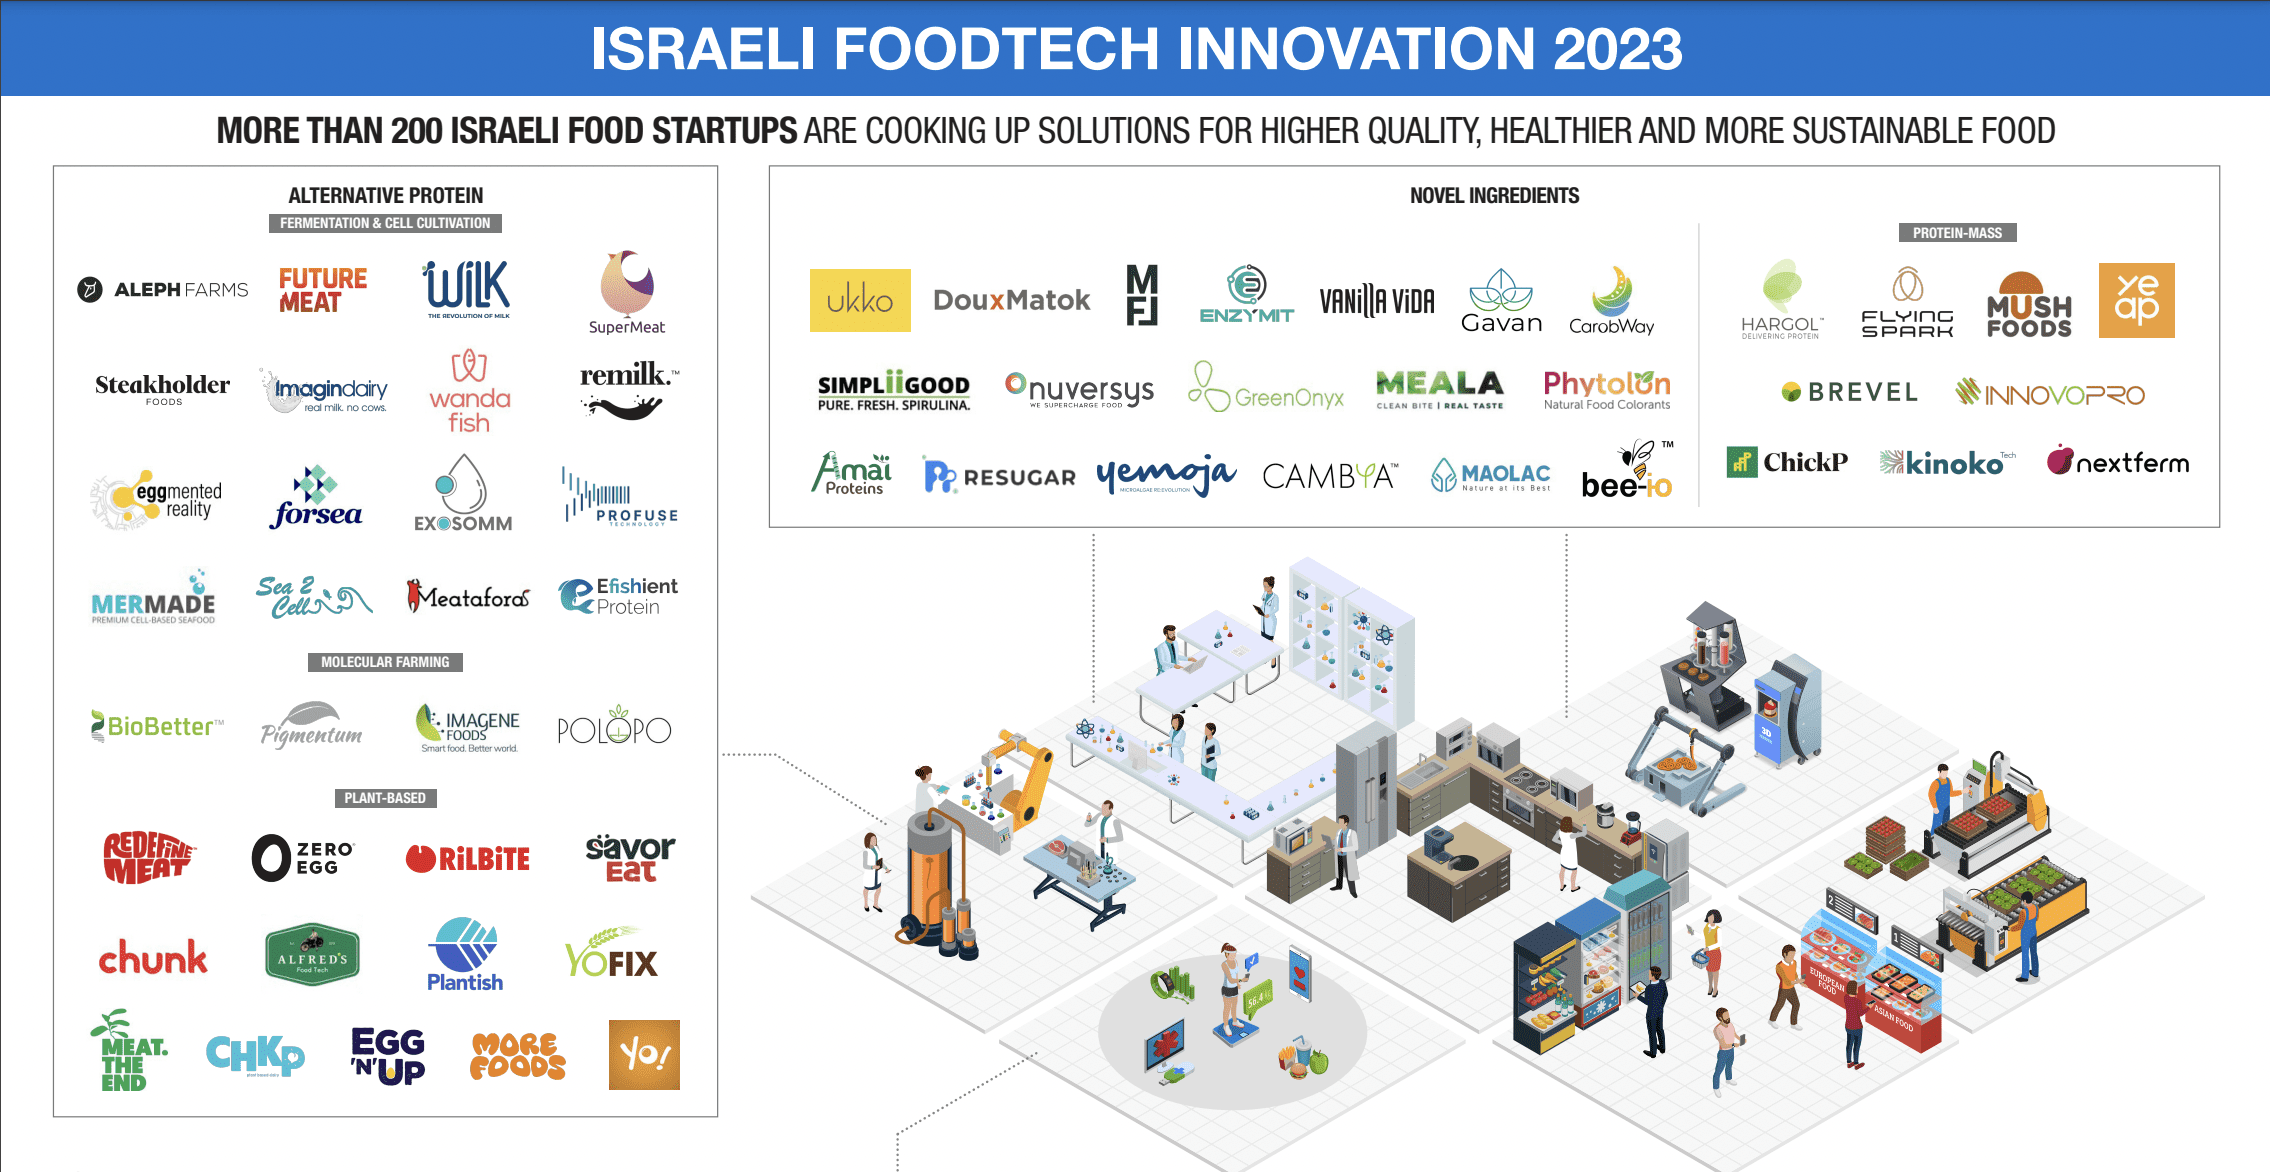 Israel FoodTech Landscape Map 2023